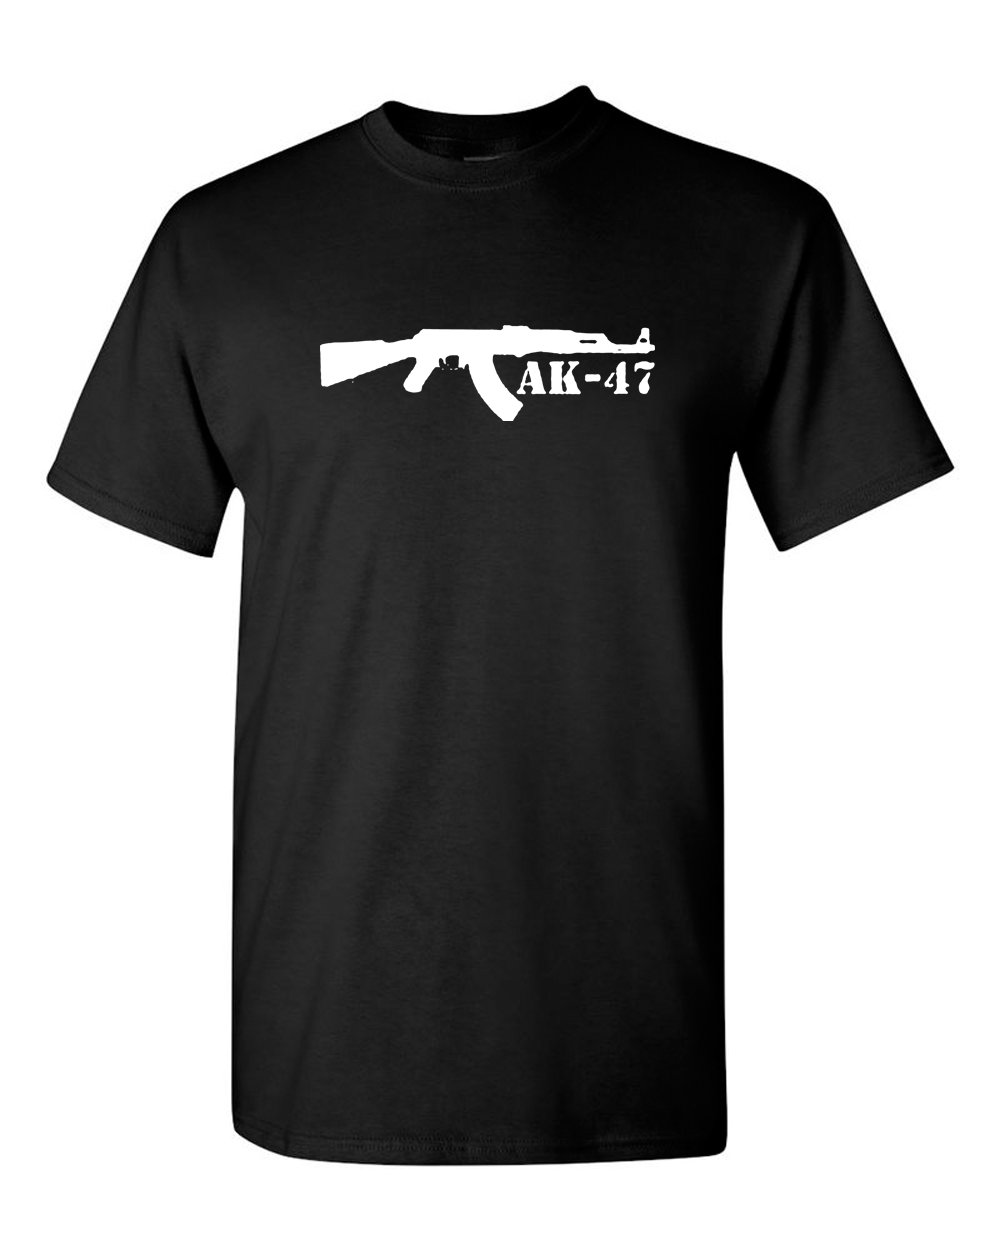 AK-47 Tees Assault Rifle T-shirt Second Amendment Tees - Etsy